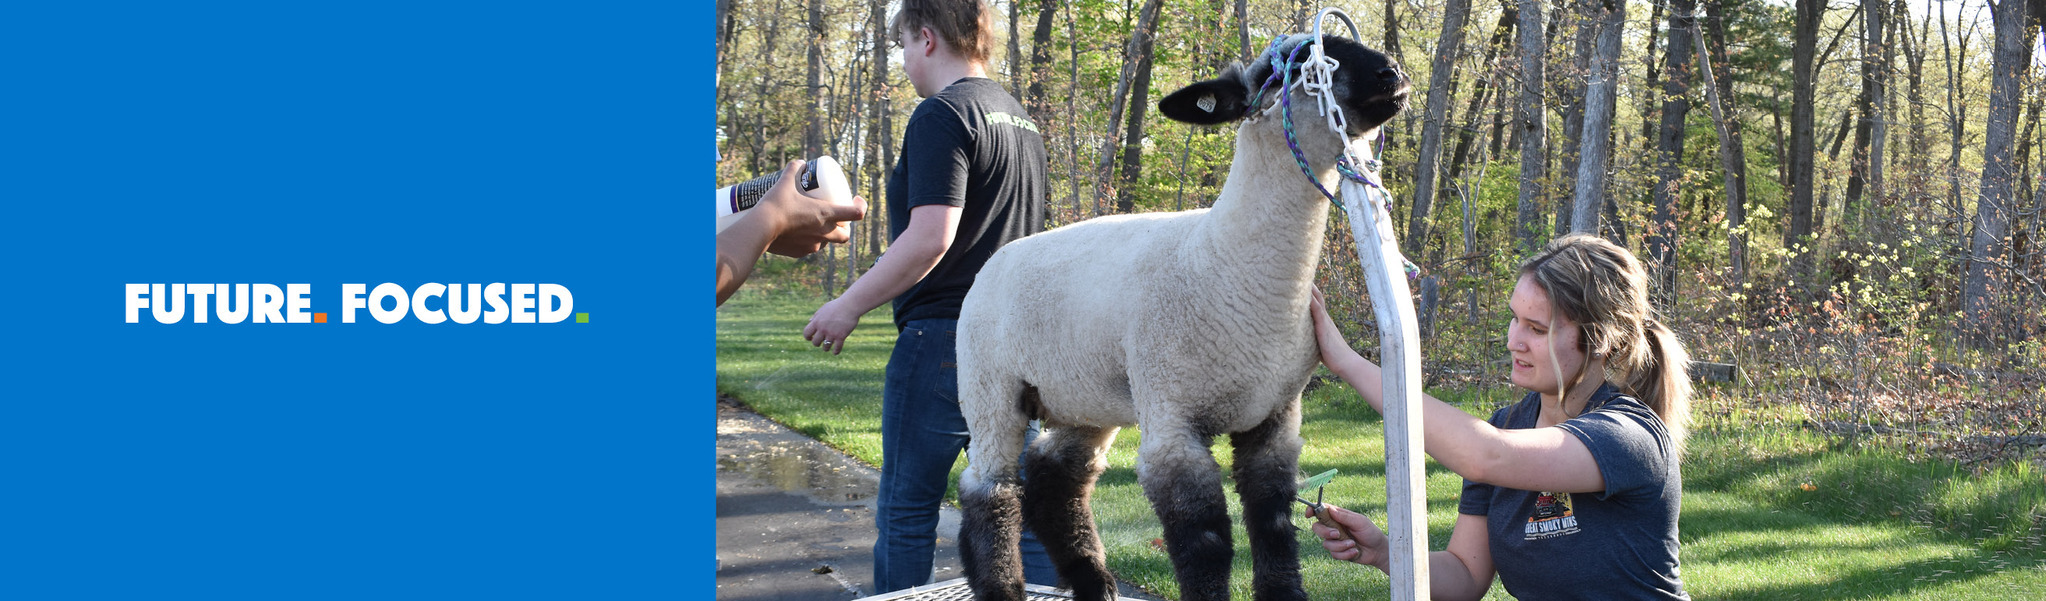 Environmental/Veterinary Sciences student grooming a sheep